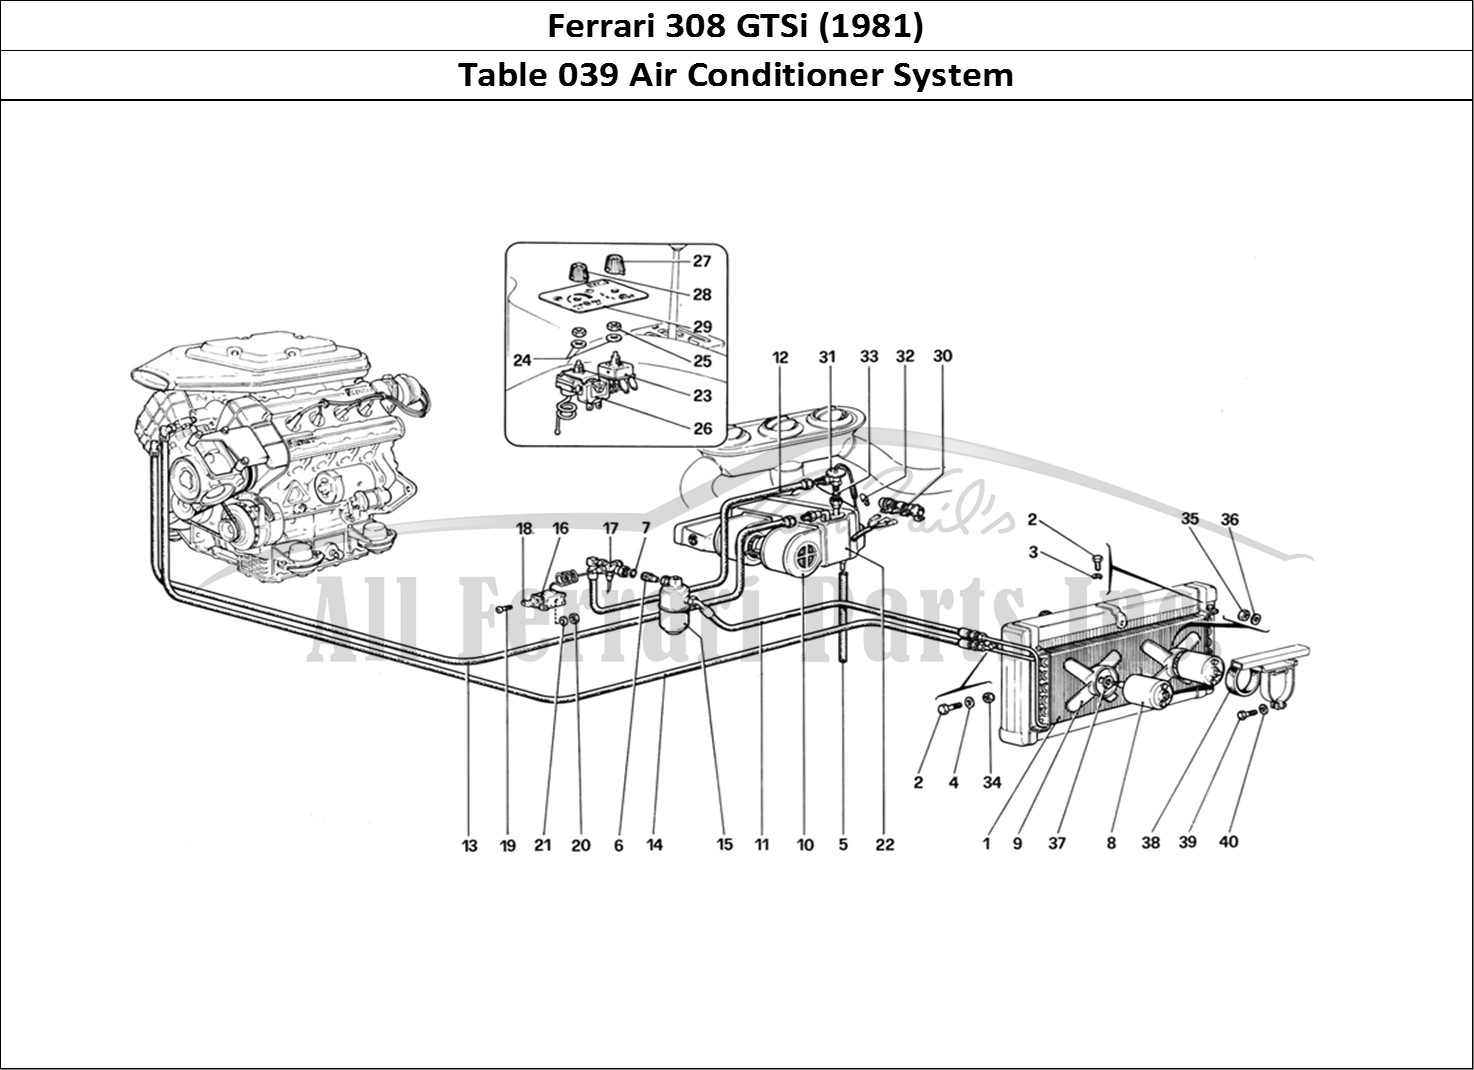 Ferrari Parts Ferrari 308 GTBi (1981) Page 039 Air Conditioning System